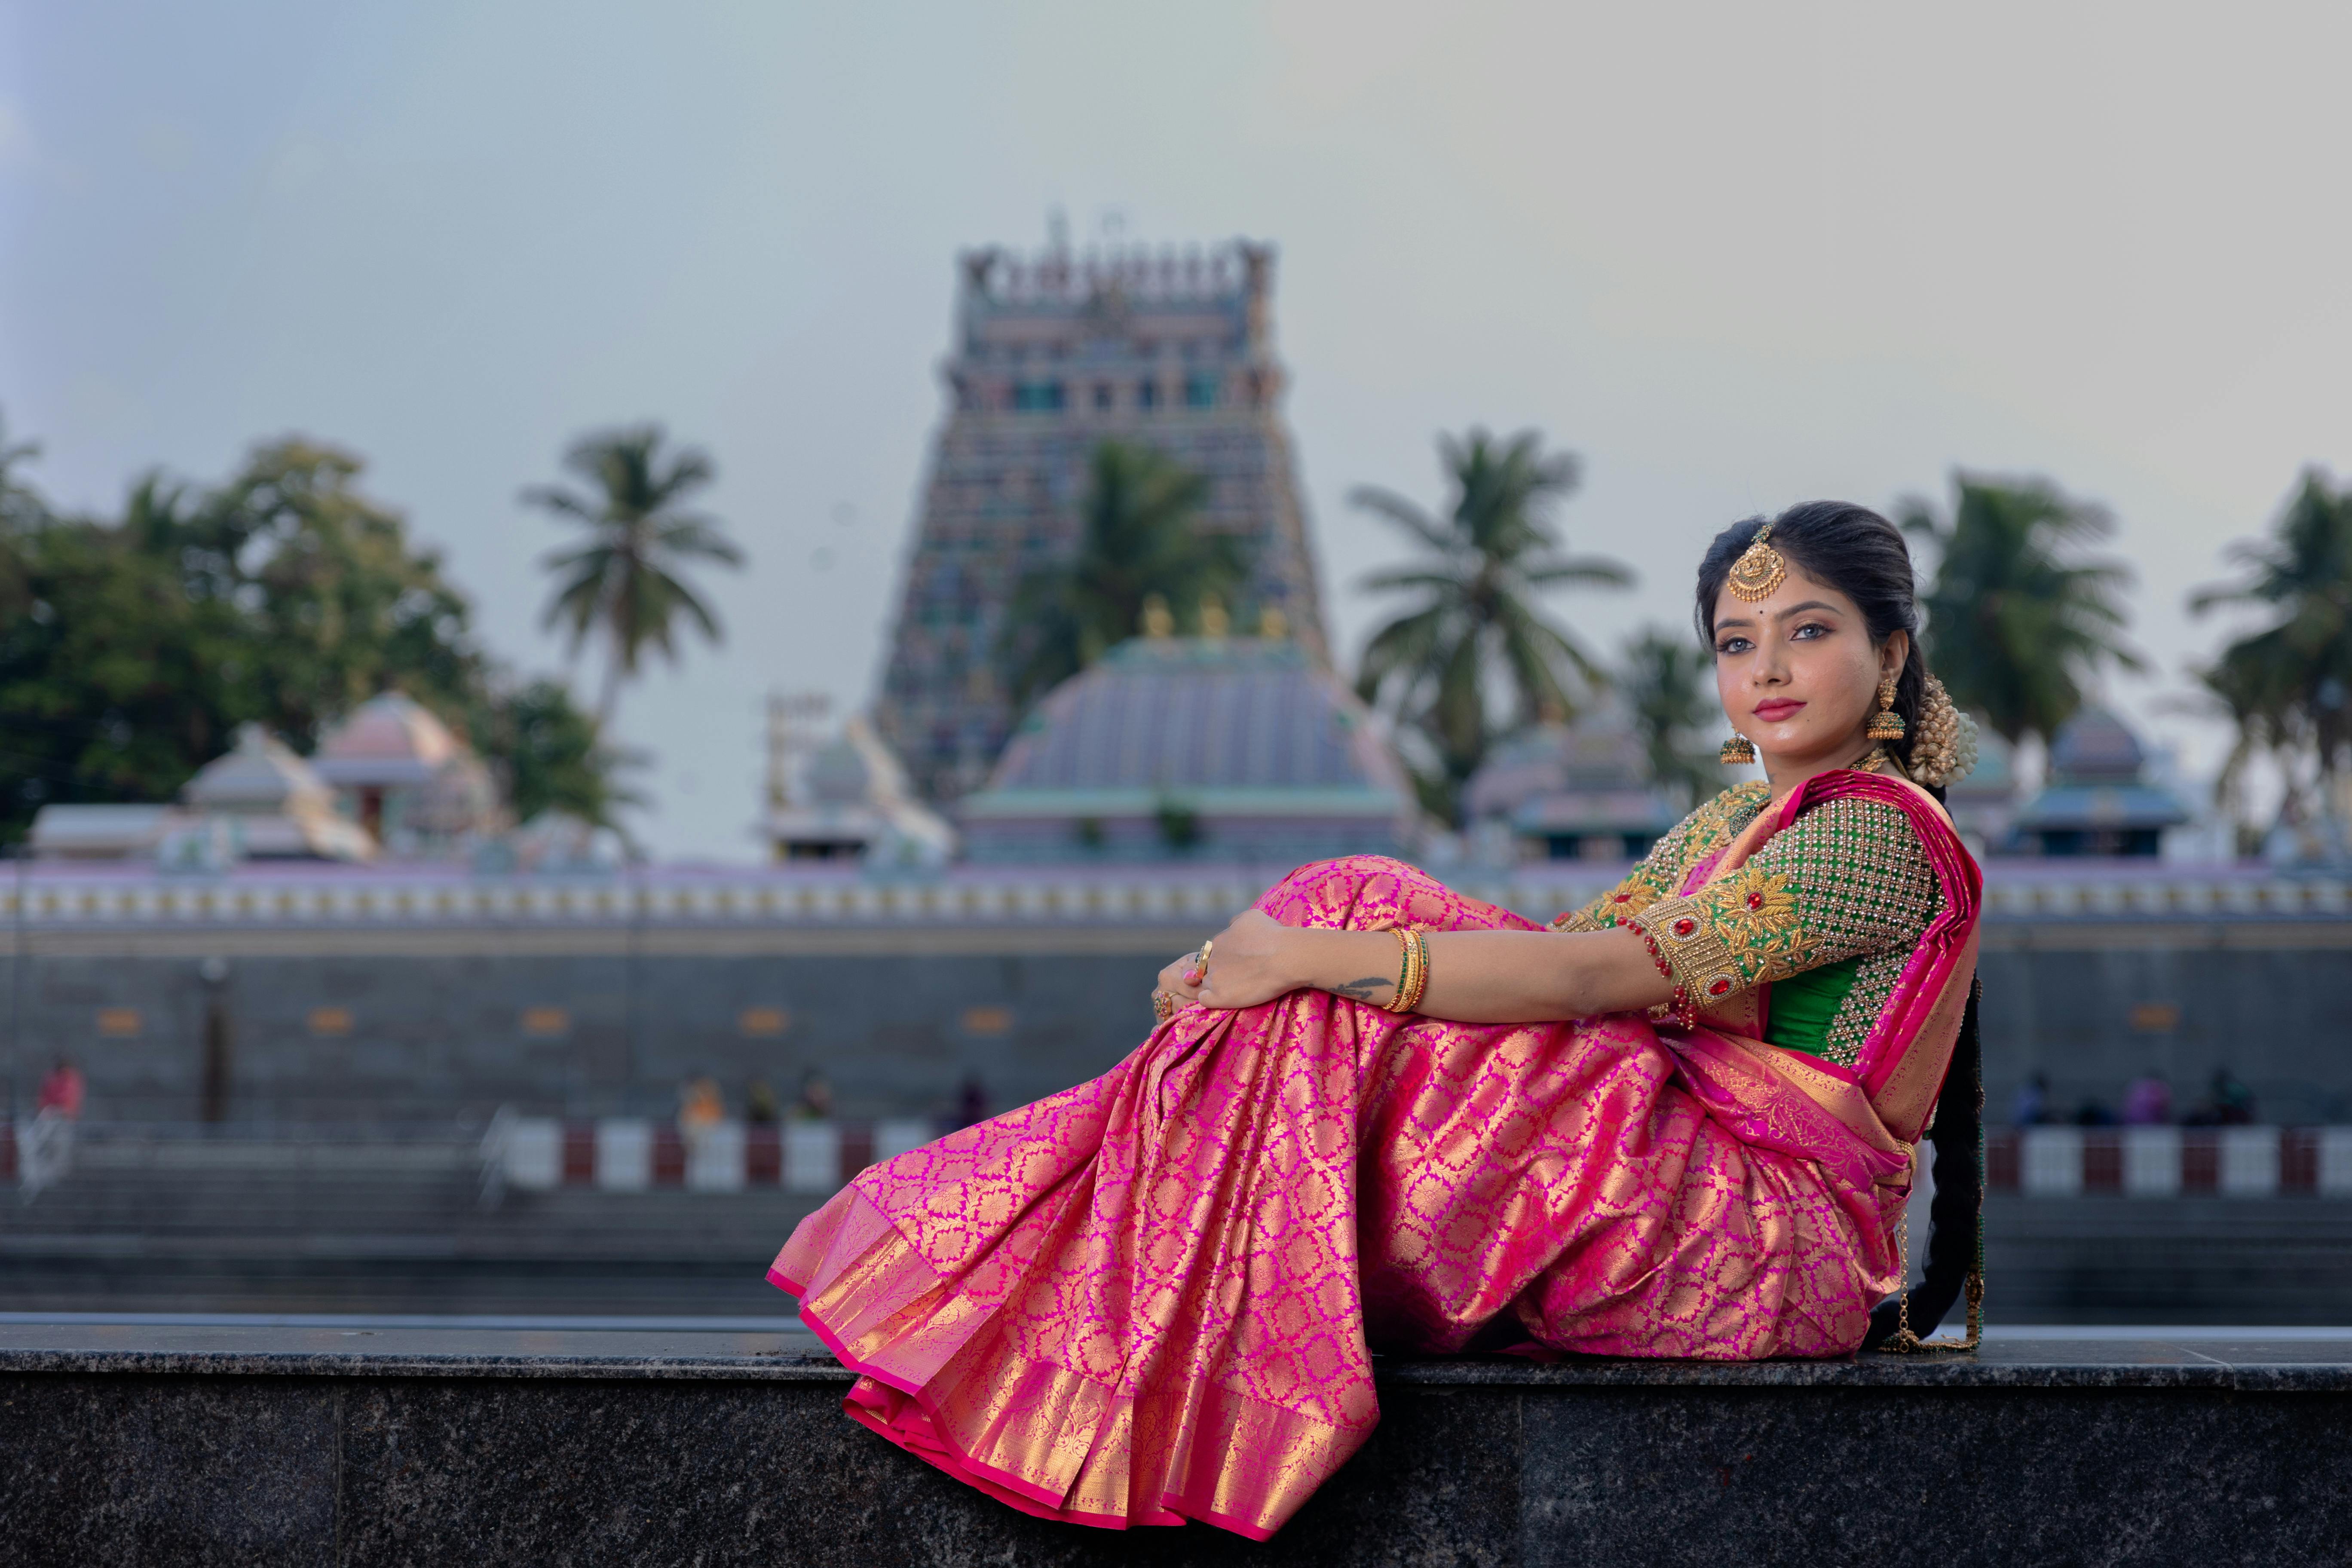 Free Photo | Young woman posing while wearing traditional sari garment